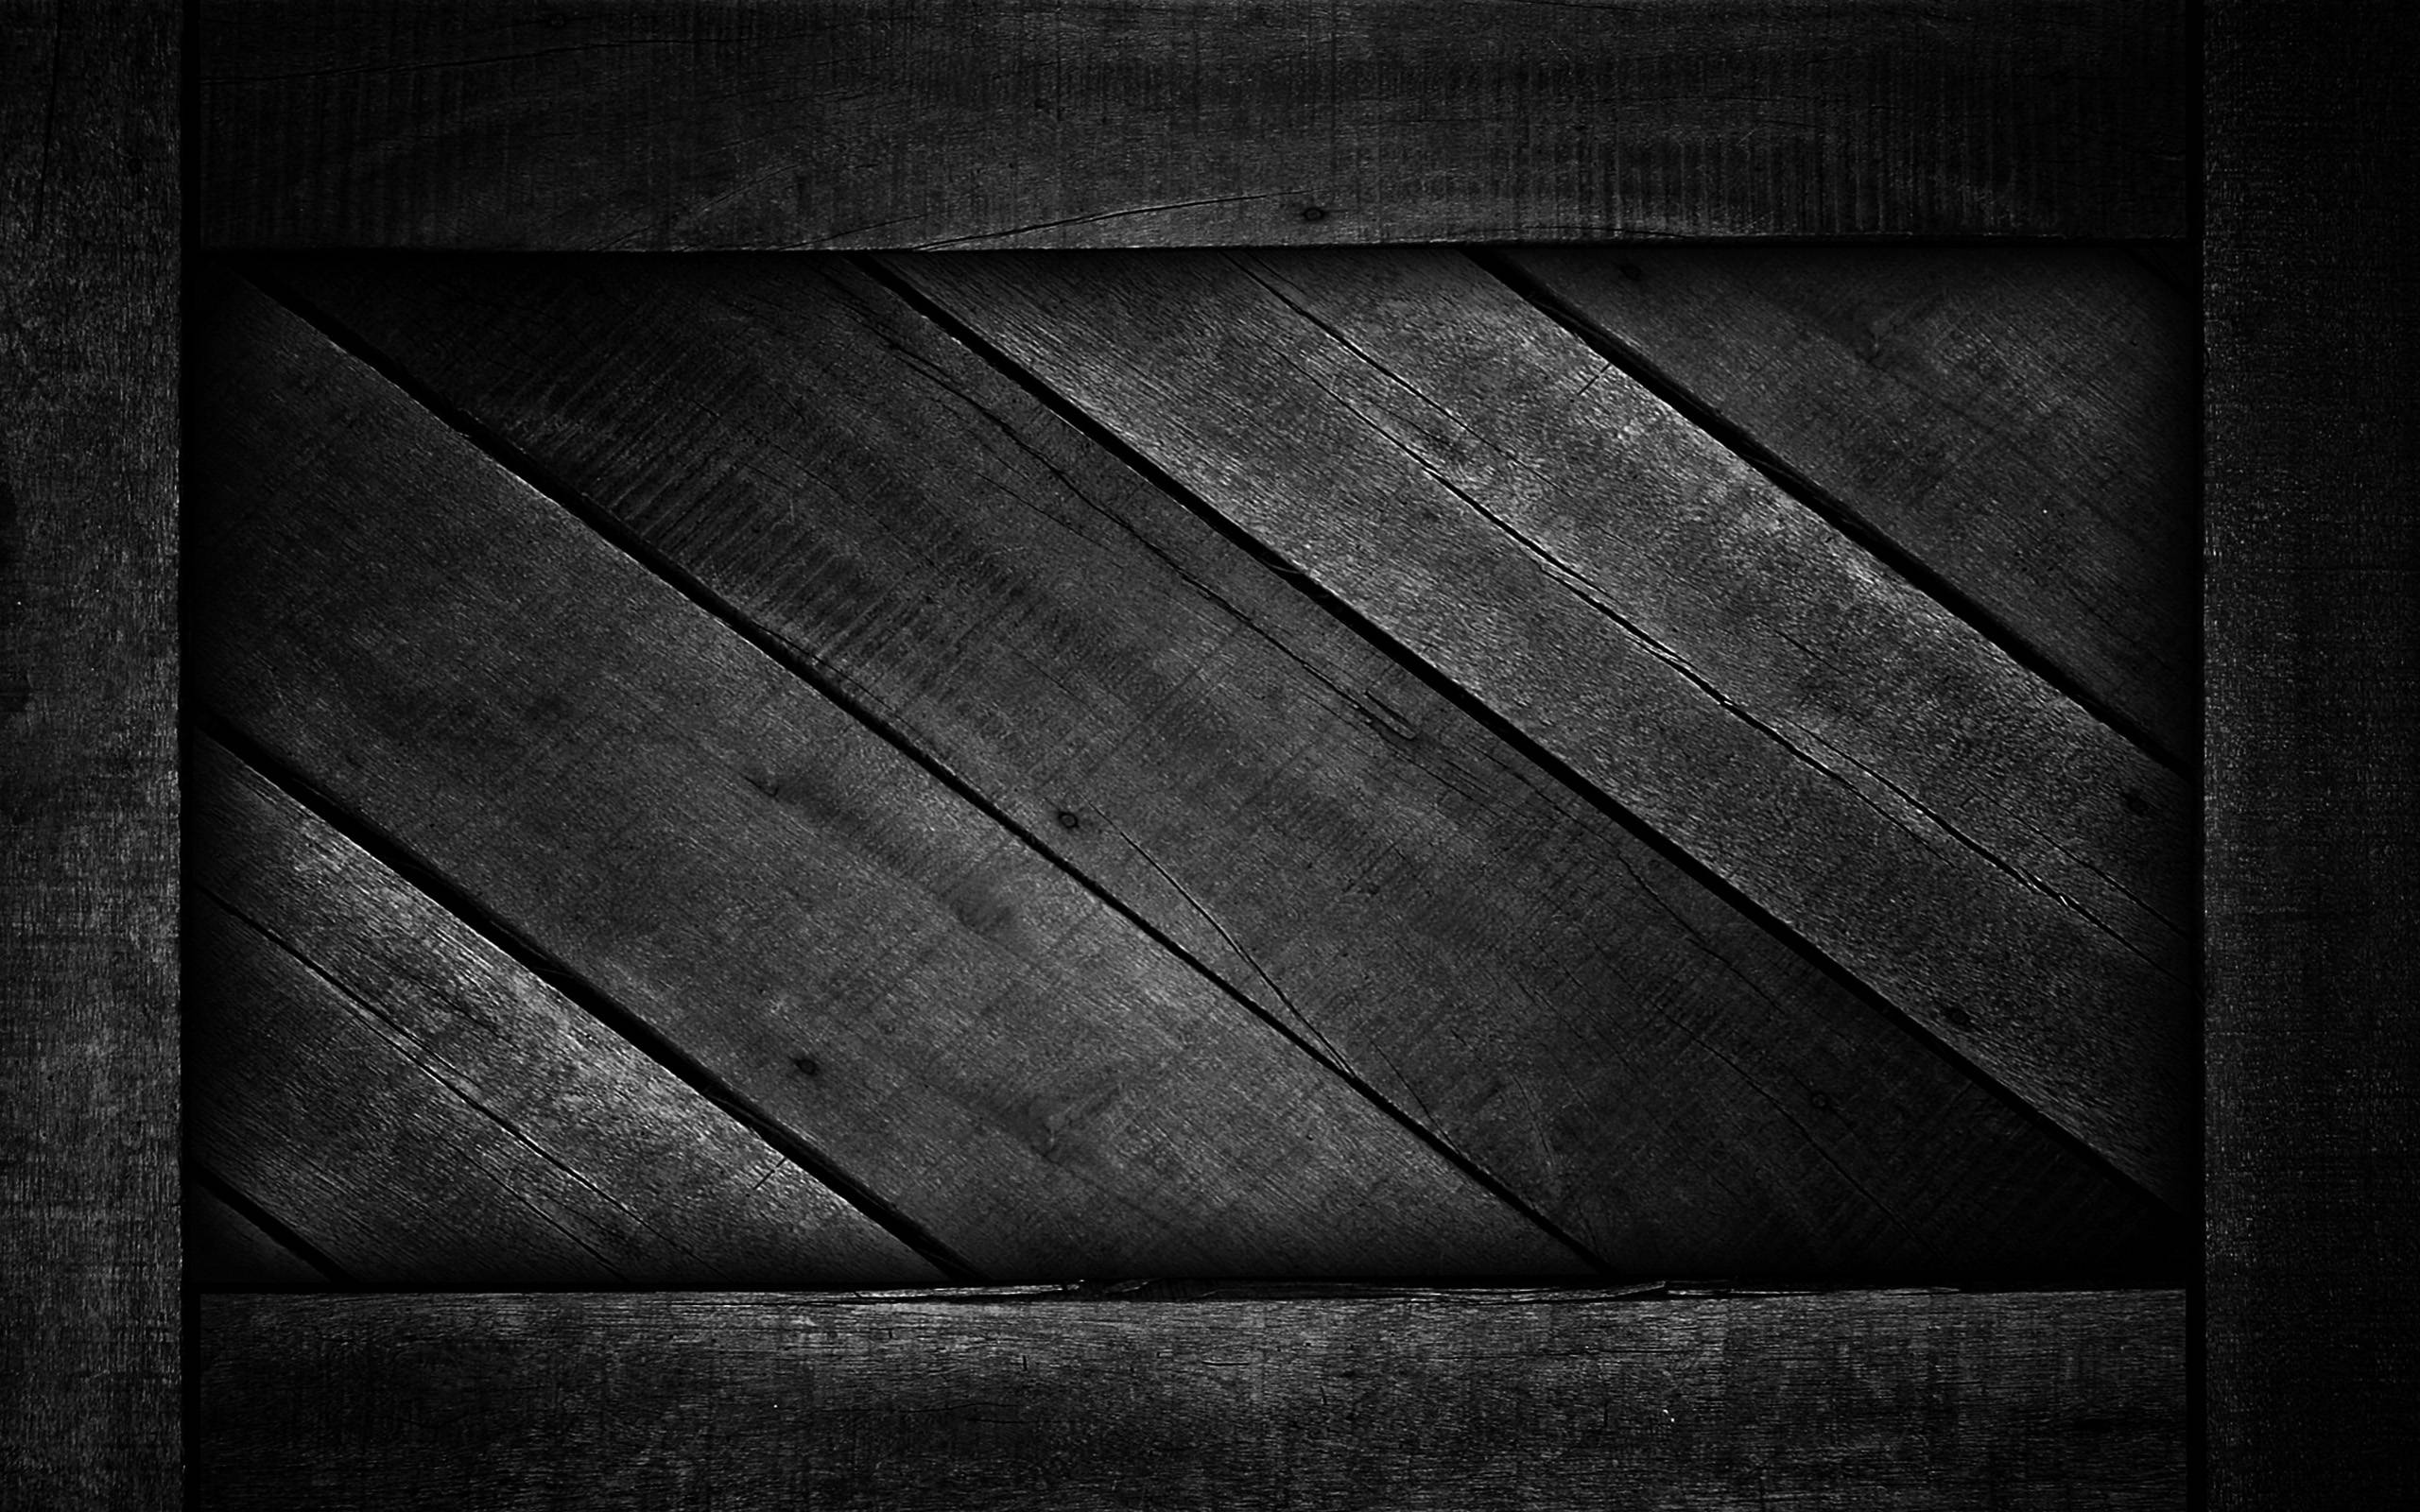 Dark Wood Wallpaper HD wallpaper search